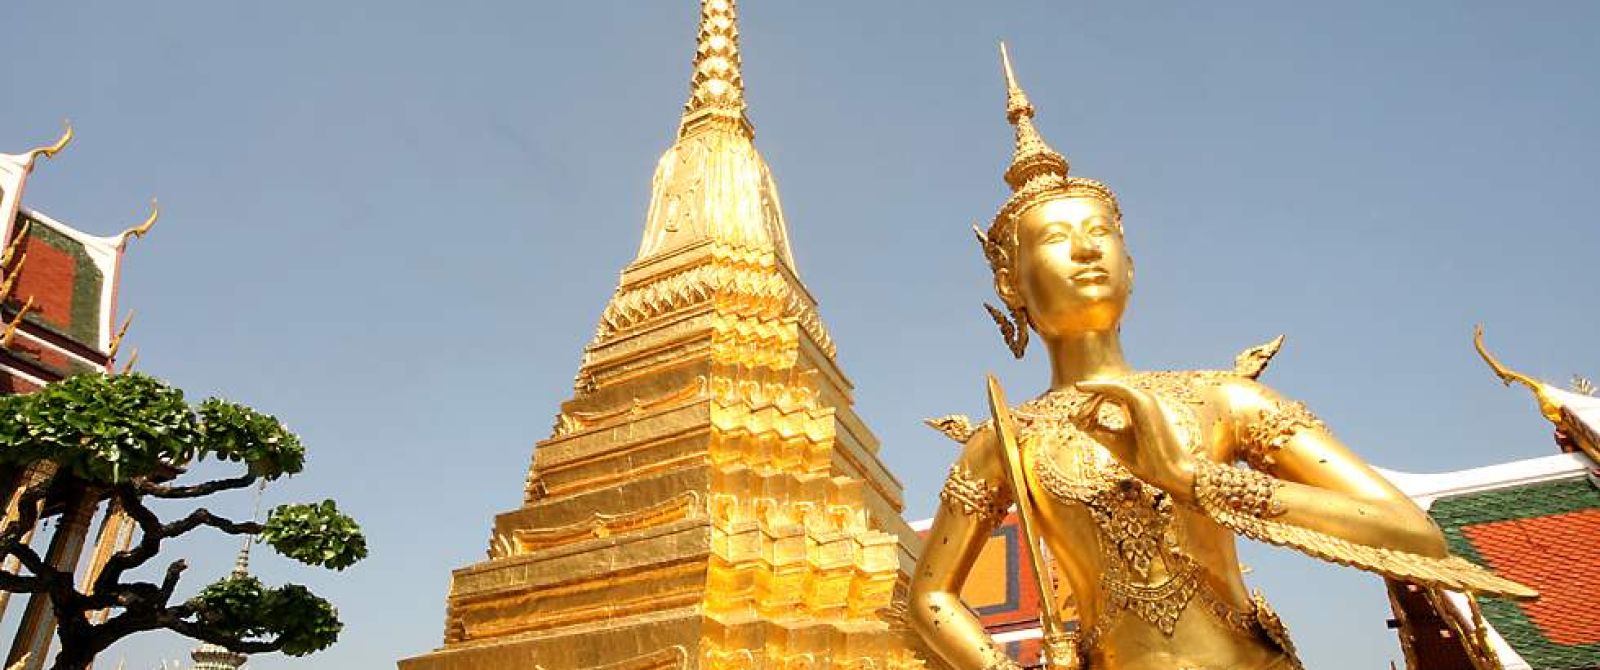 14 Días De Aventura En Tailandia